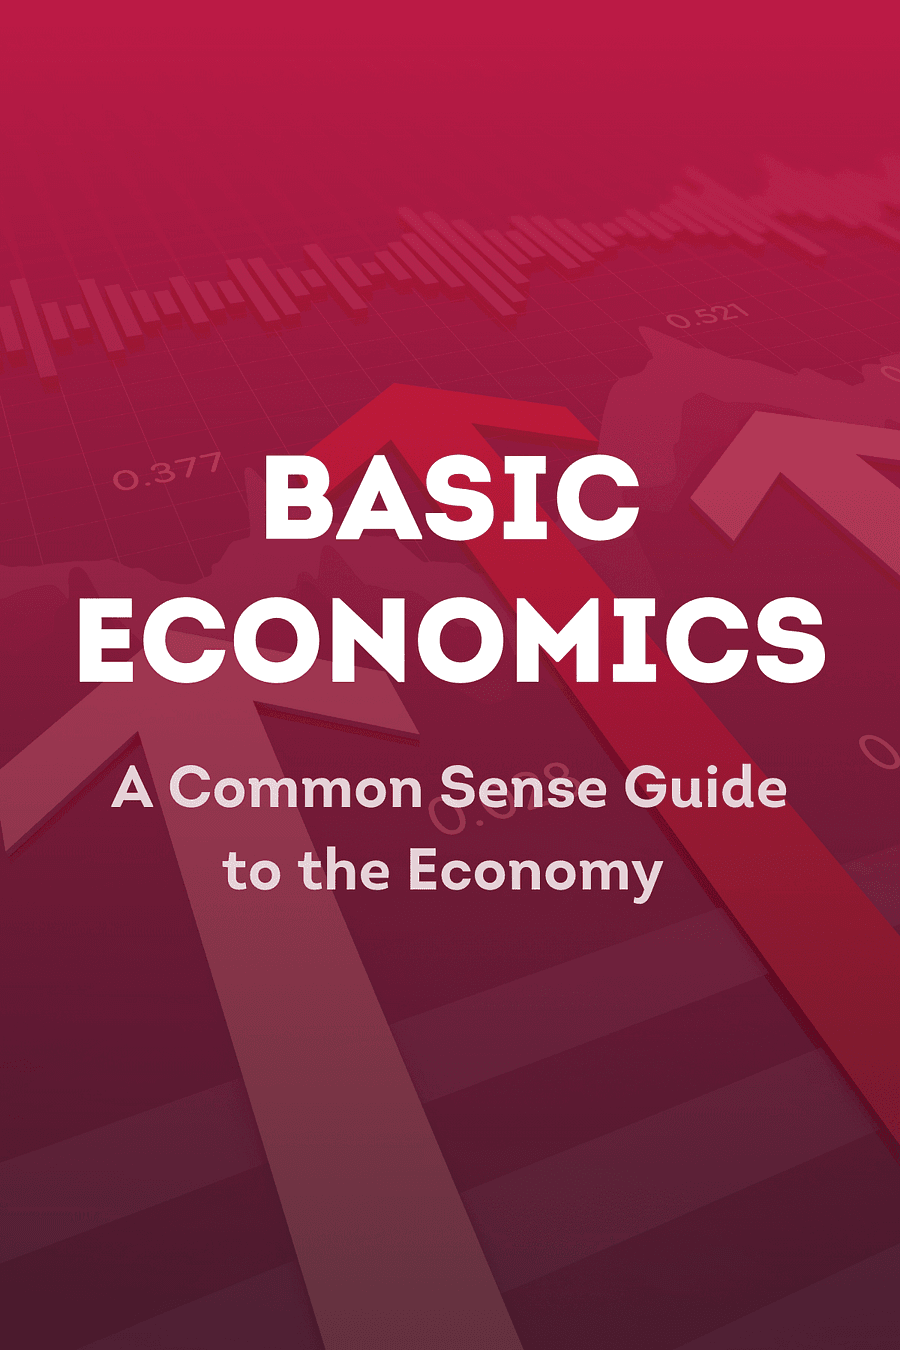 Basic Economics by Thomas Sowell - Book Summary